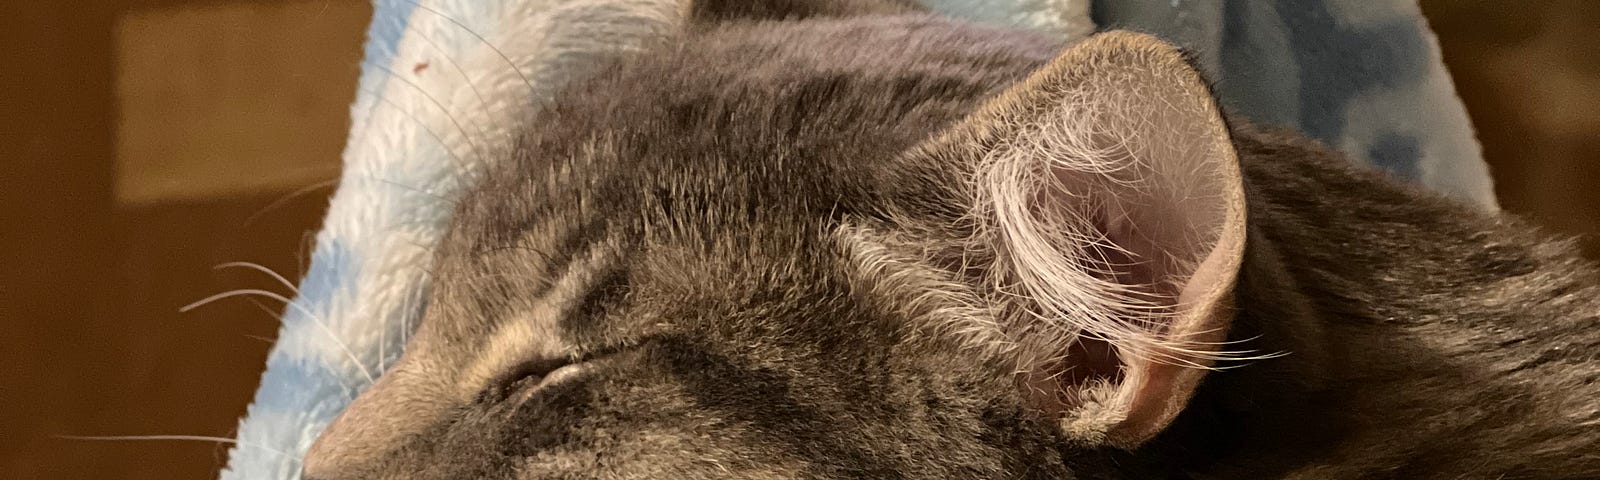 Gray tabby kitten sleeping soundly on blue fluffy blanket.